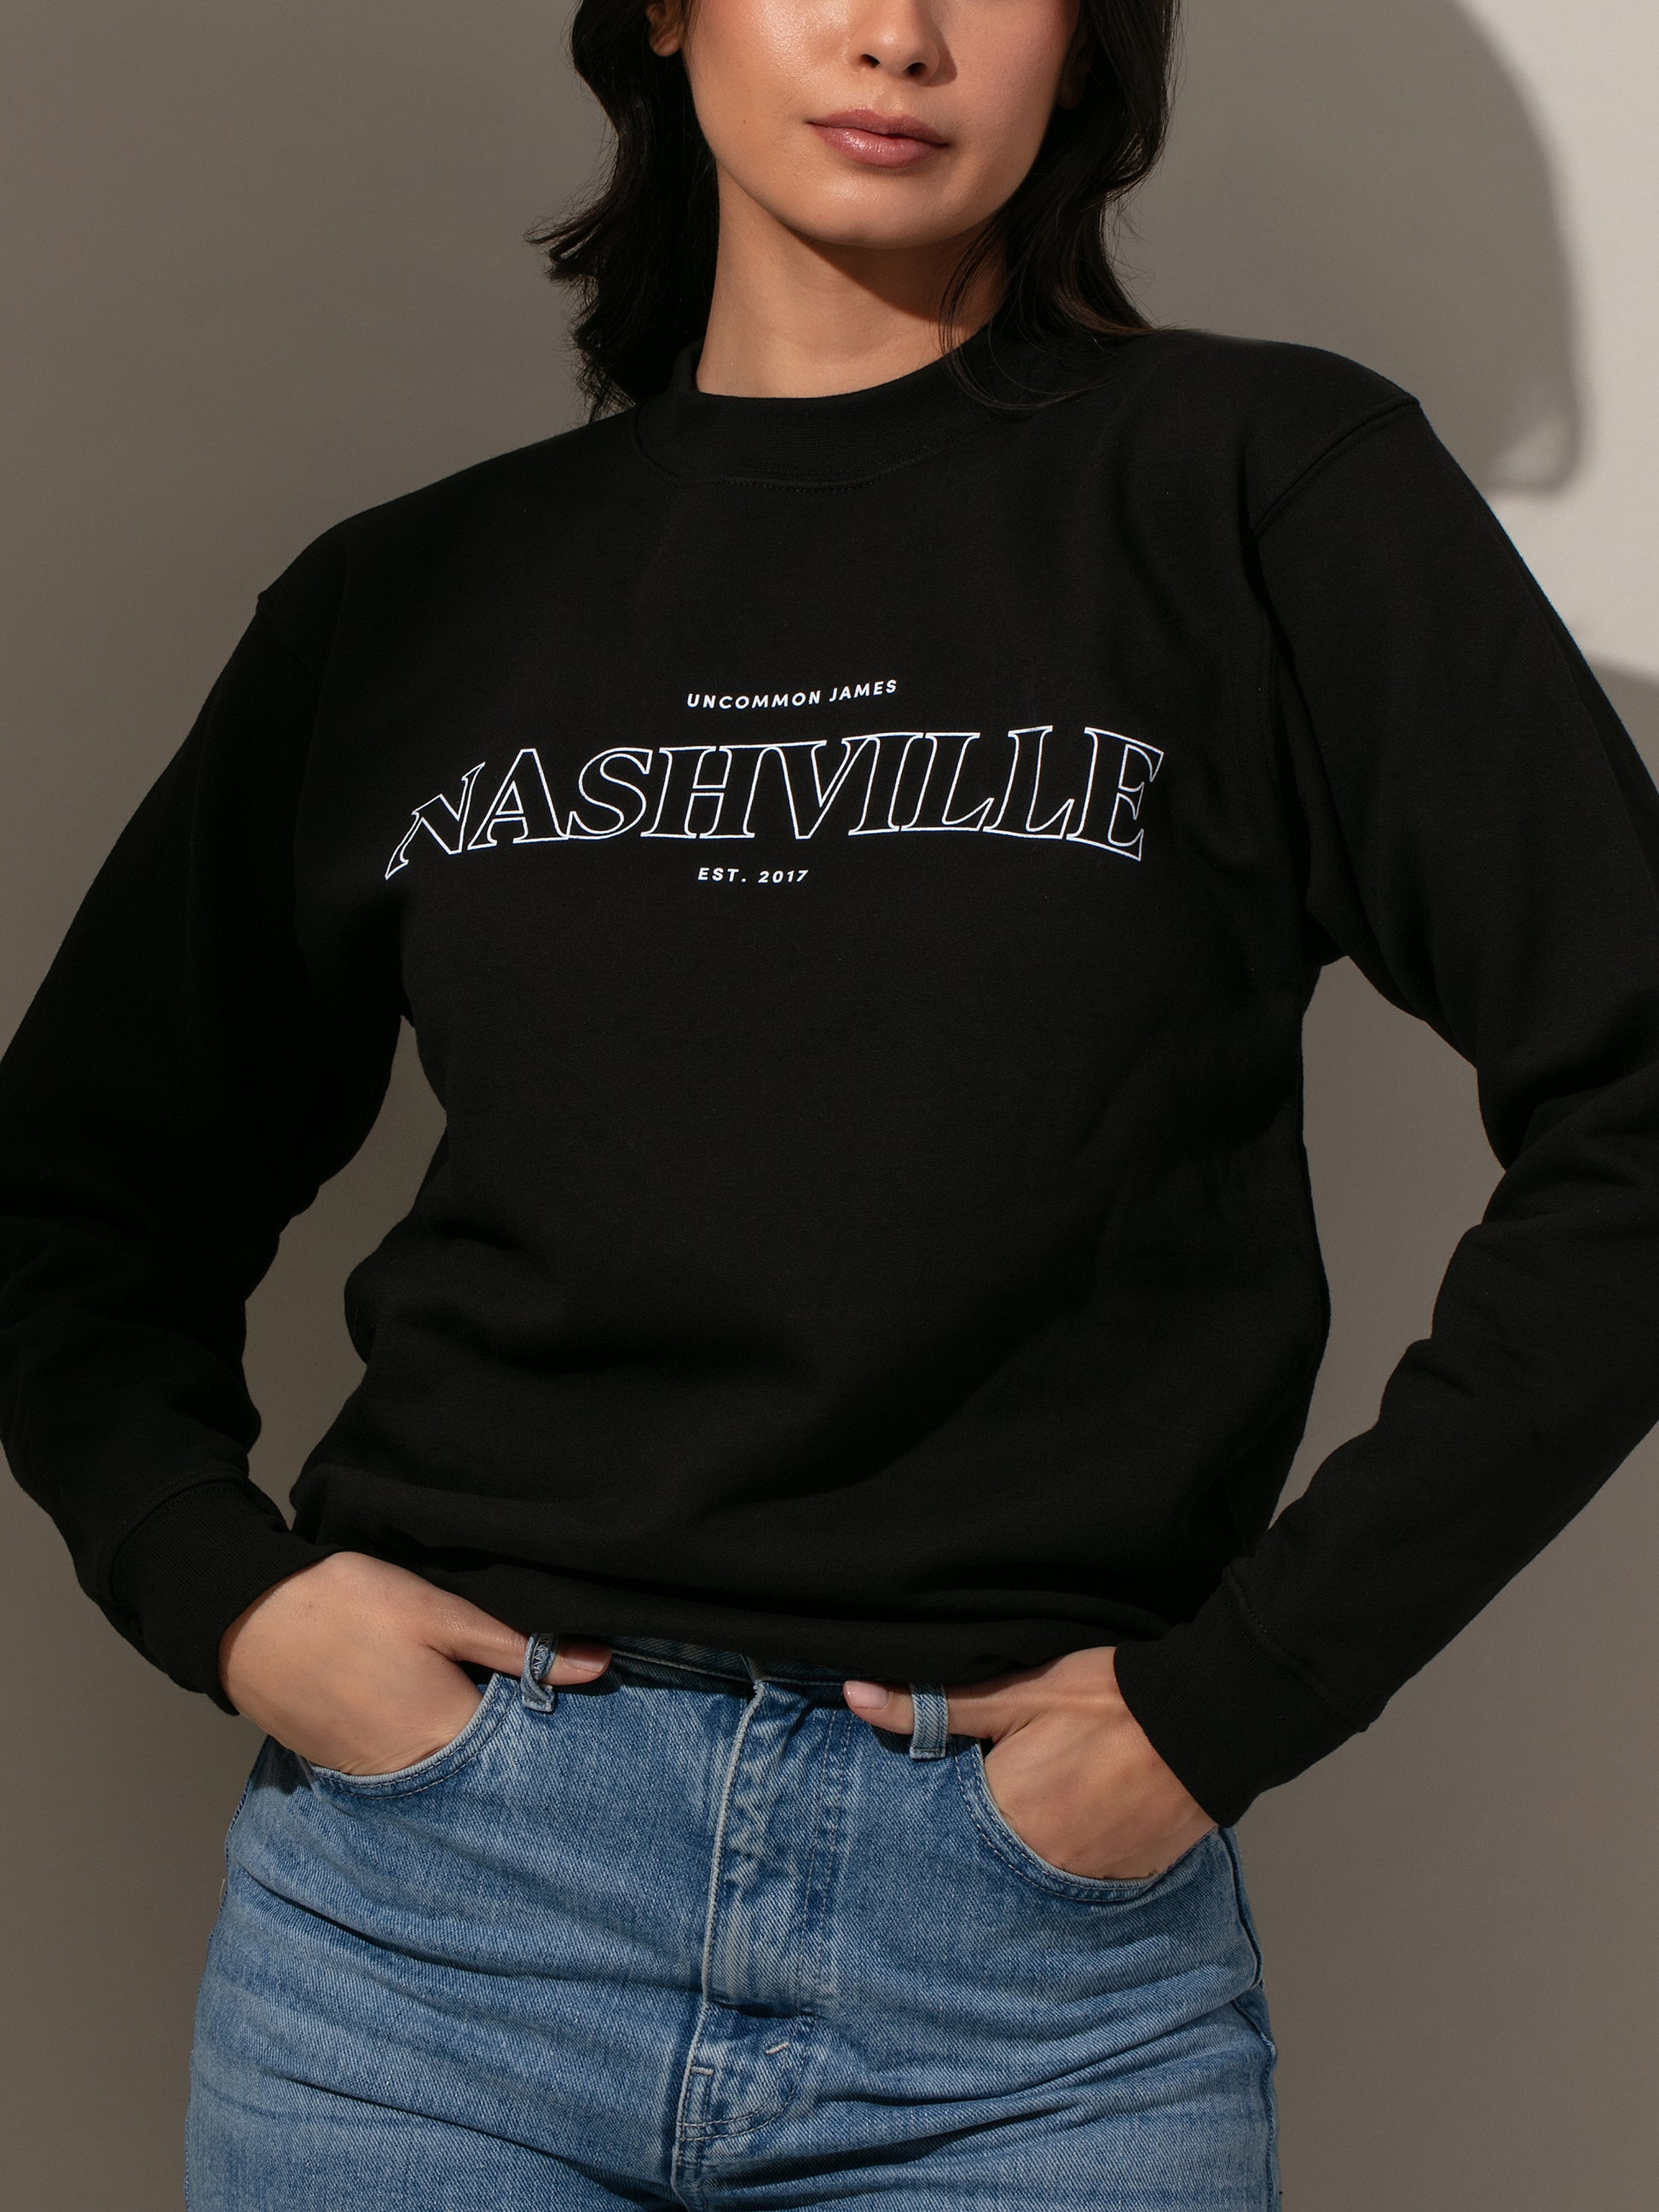 Nashville Sweatshirt | Black | Model Image 2 | Uncommon James